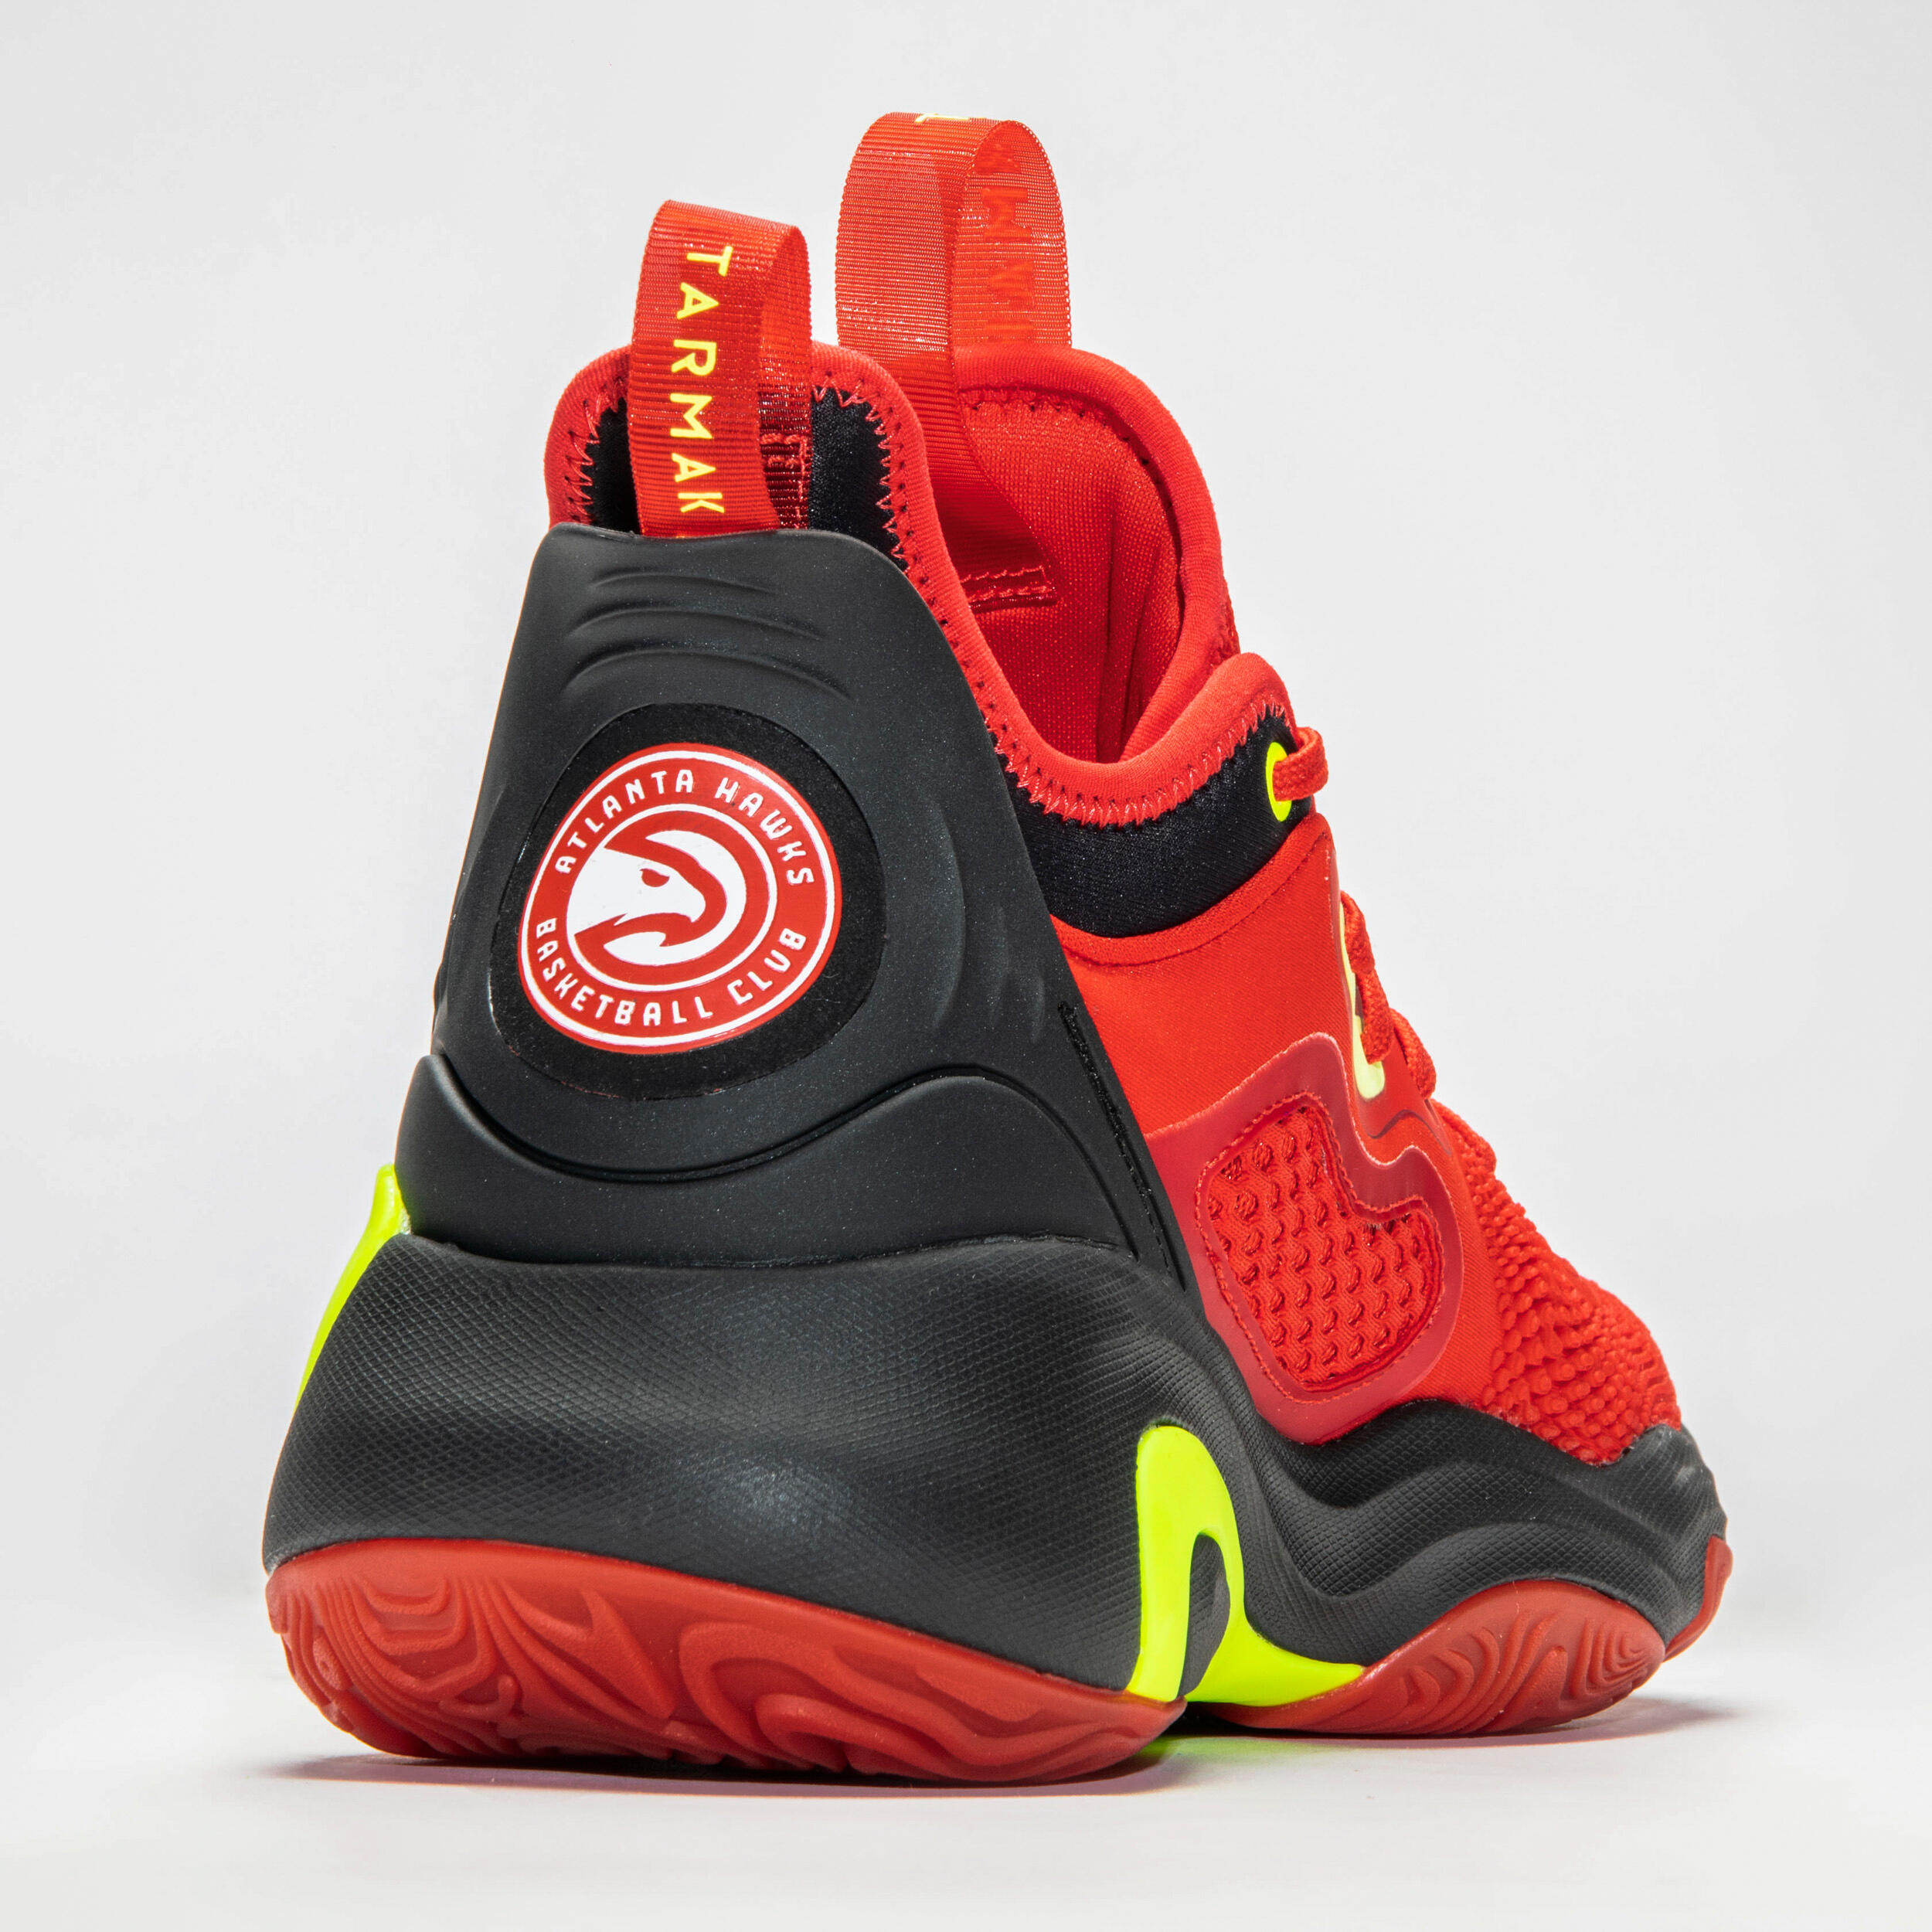 Men's/Women's Basketball Shoes SE900 - NBA Atlanta Hawks/Red 4/16